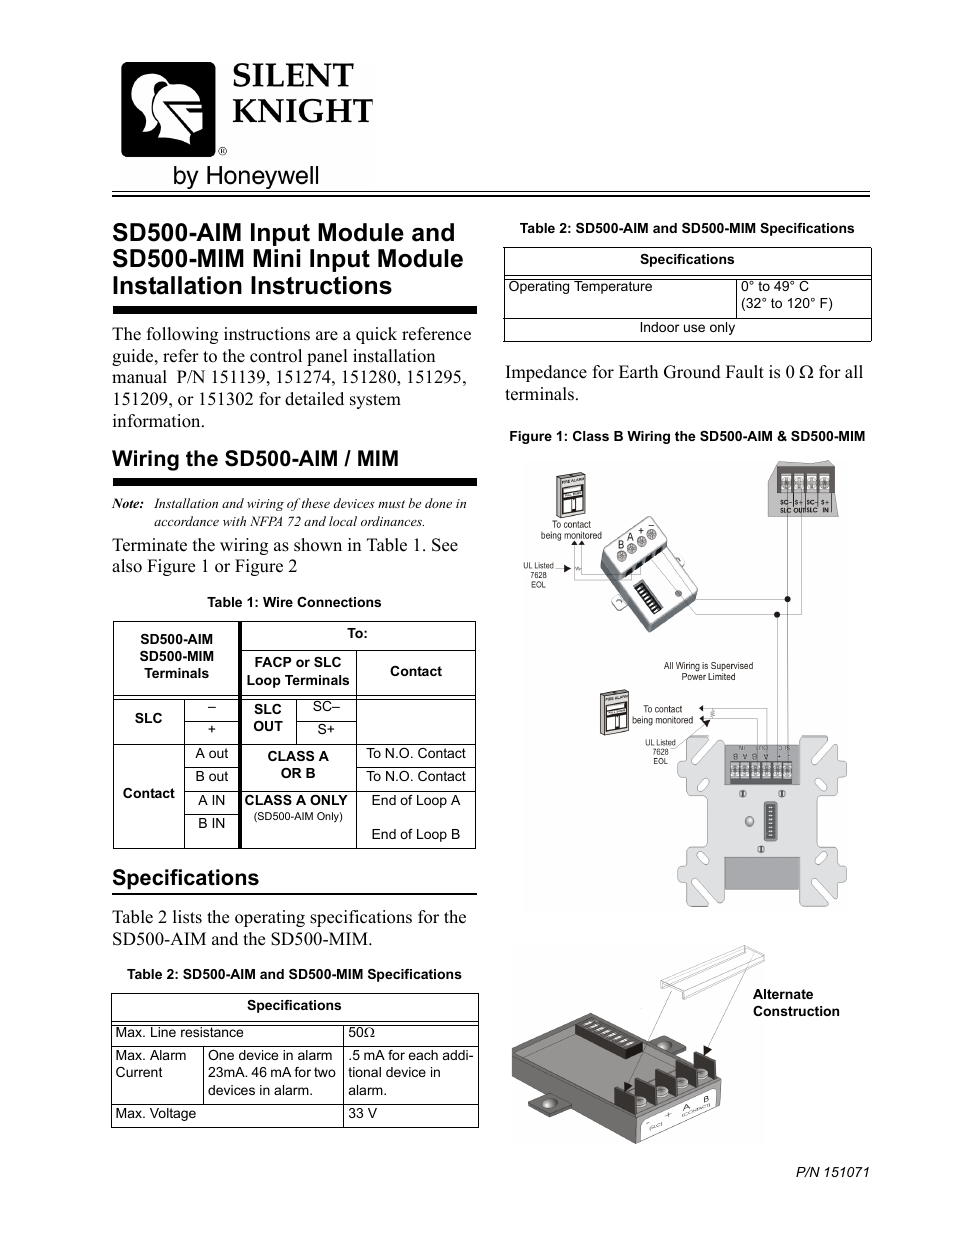 SD500-AIM Addressable Input Module and SD500-MIM Addressable Mini-Input Module